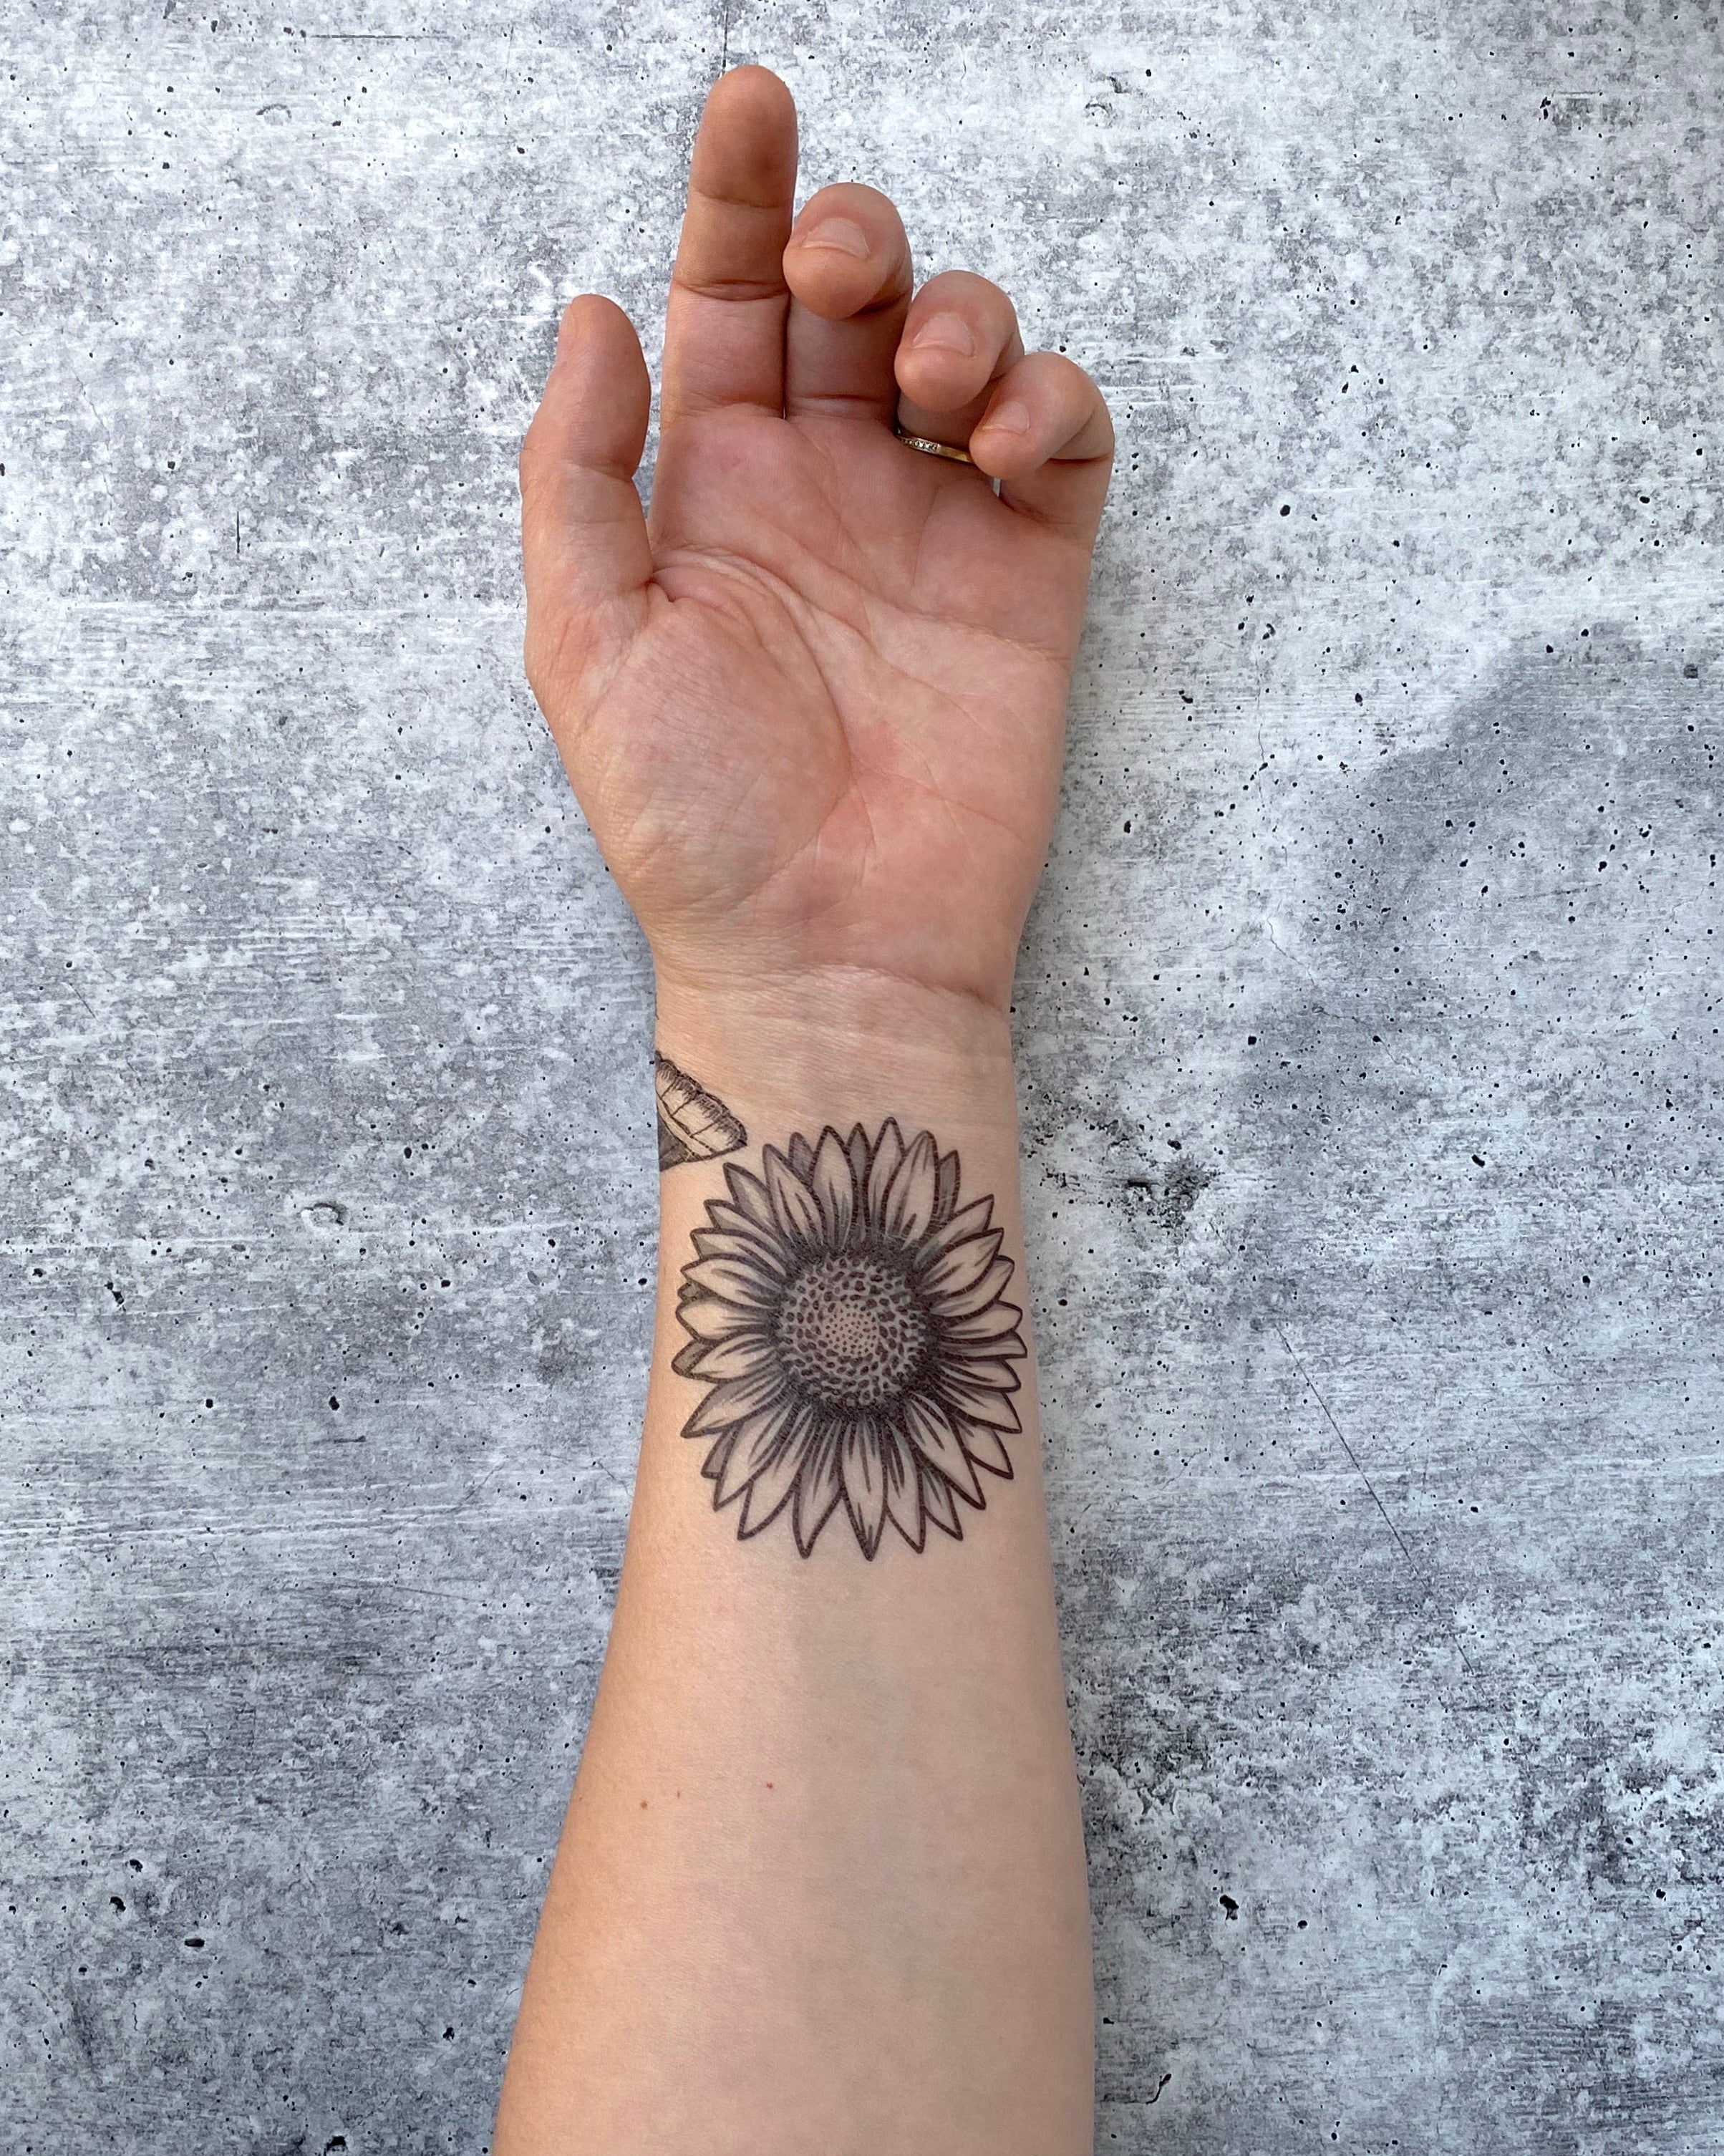 Sunflower tattoo a symbol of sun and joy   Онлайн блог о тату  IdeasTattoo